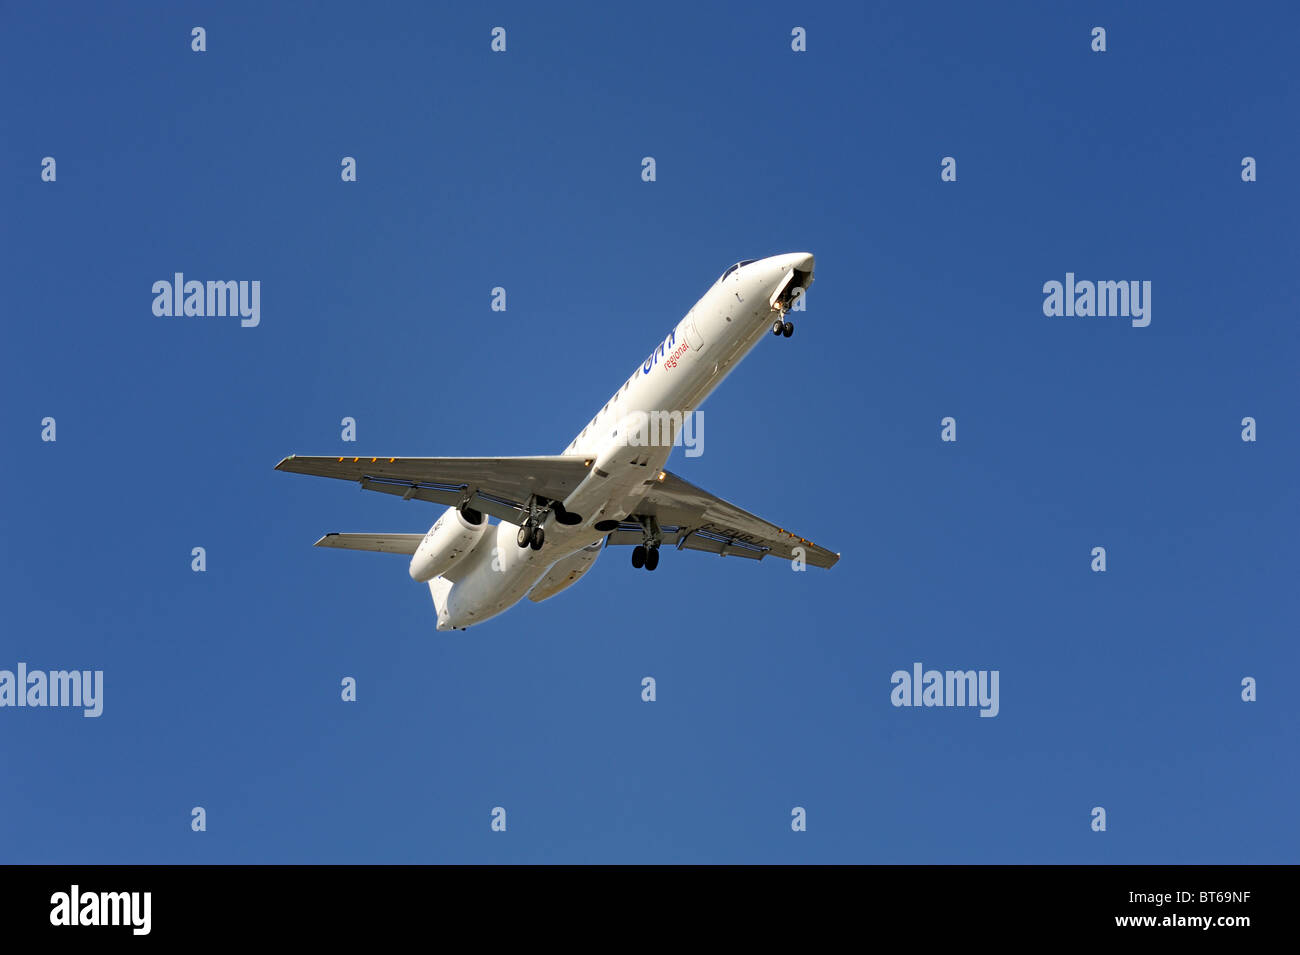 BMI regional passenger jet coming into land Stock Photo